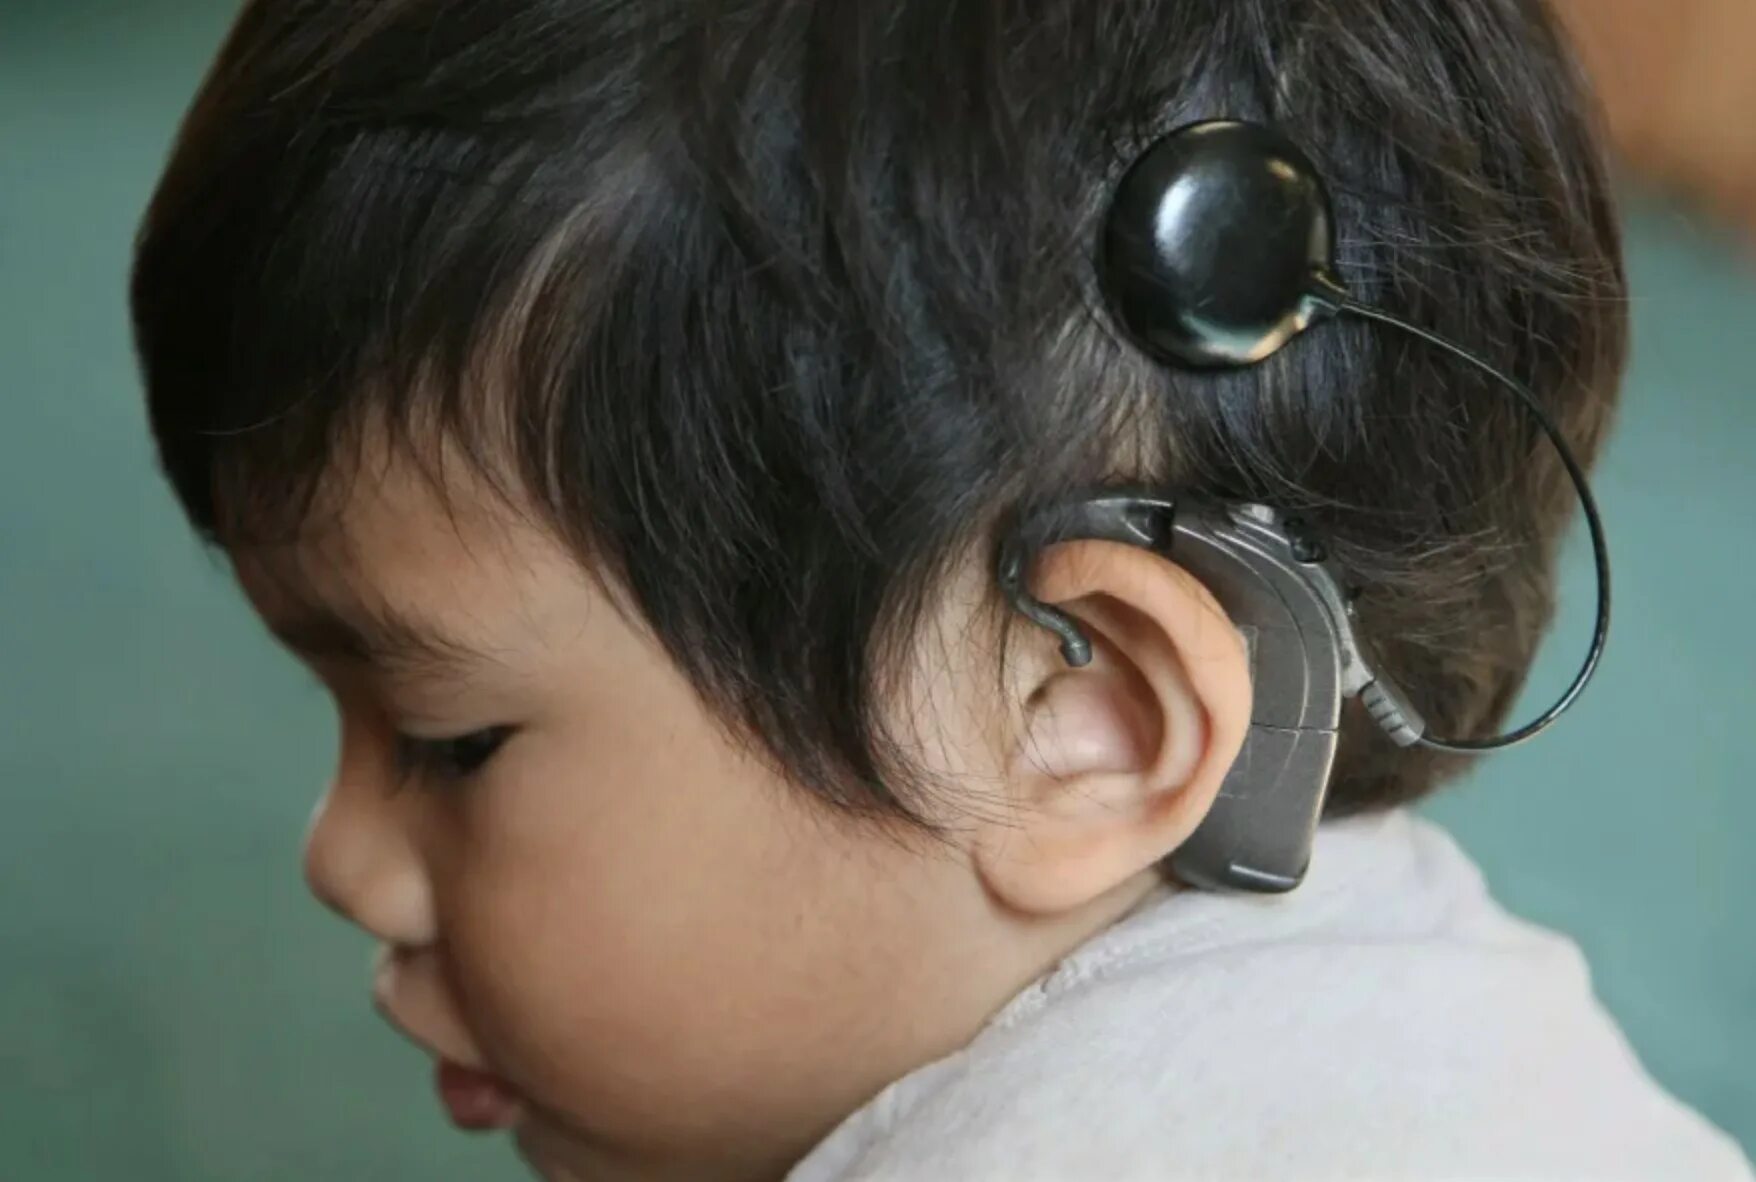 Глухота аномалия. Кохлеарная имплантация Cochlear. Аппарат для глухих кохлеарная имплантация. Кохлеарный имплант Кохлер. Дети с нарушением слуха..